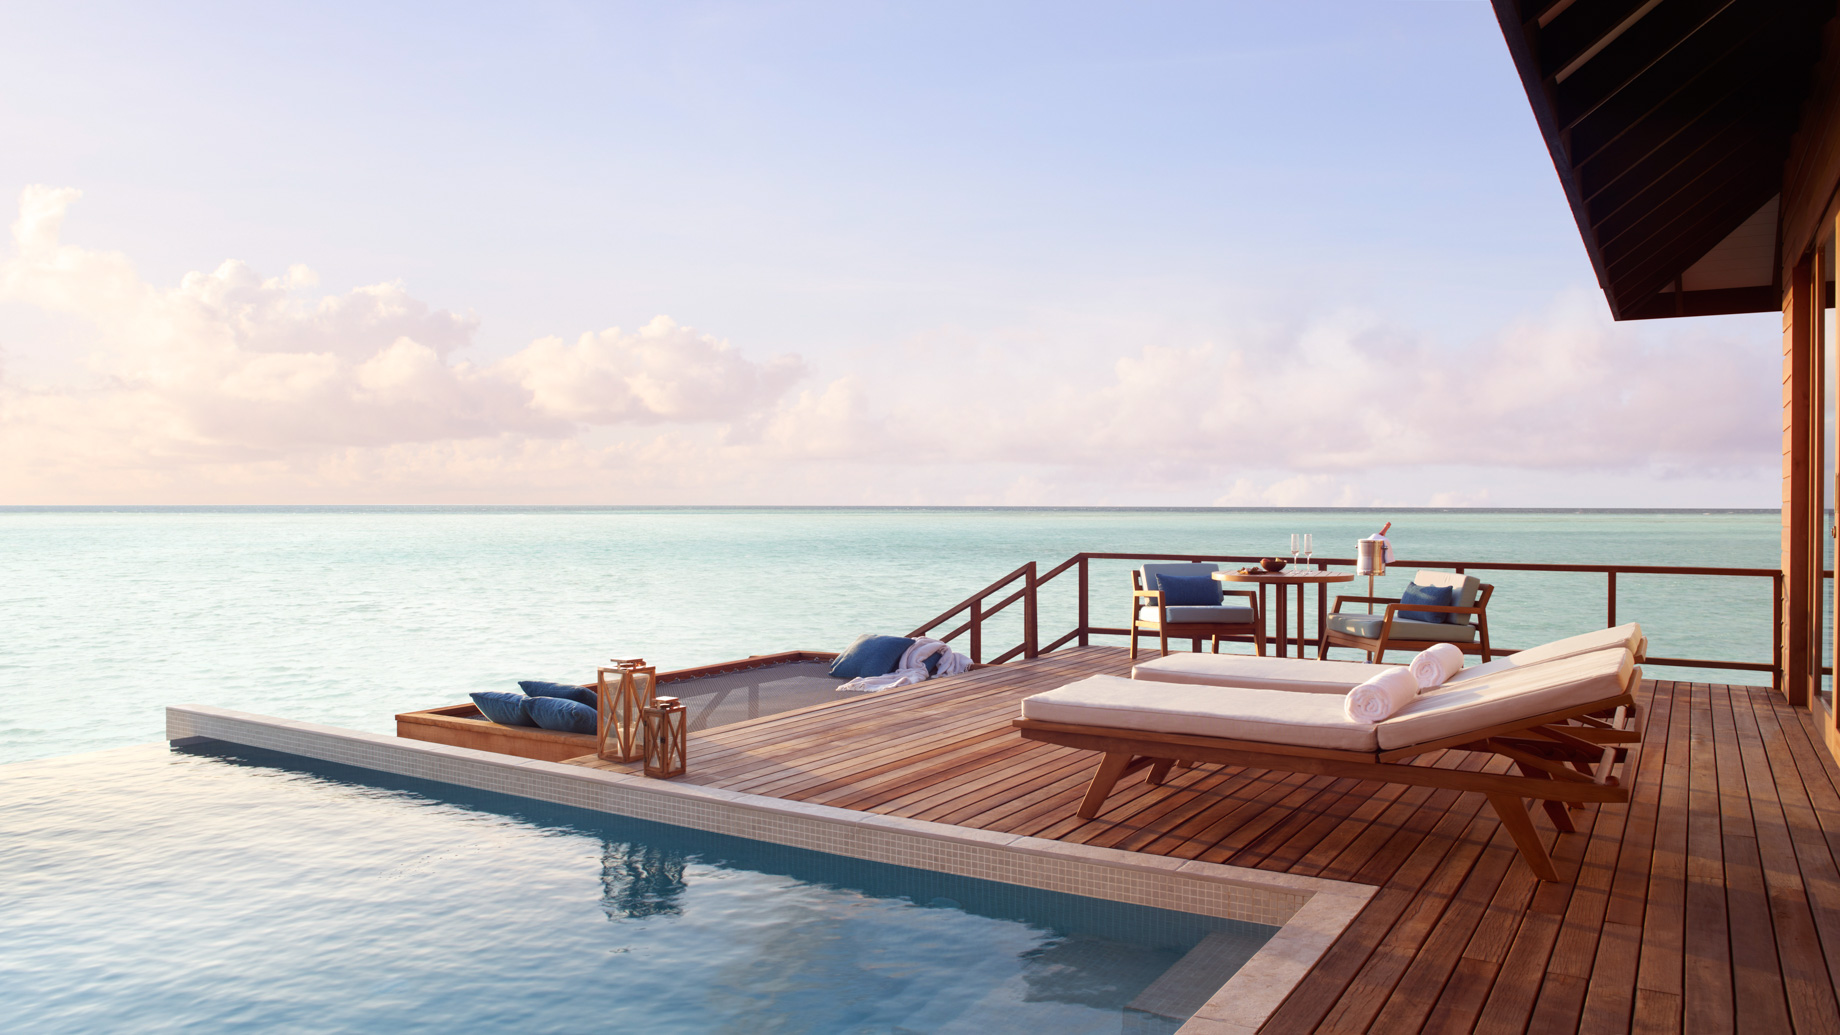 Anantara Veli Maldives Resort – South Male Atoll, Maldives – Deluxe Over Water Pool Villa Deck Ocean View